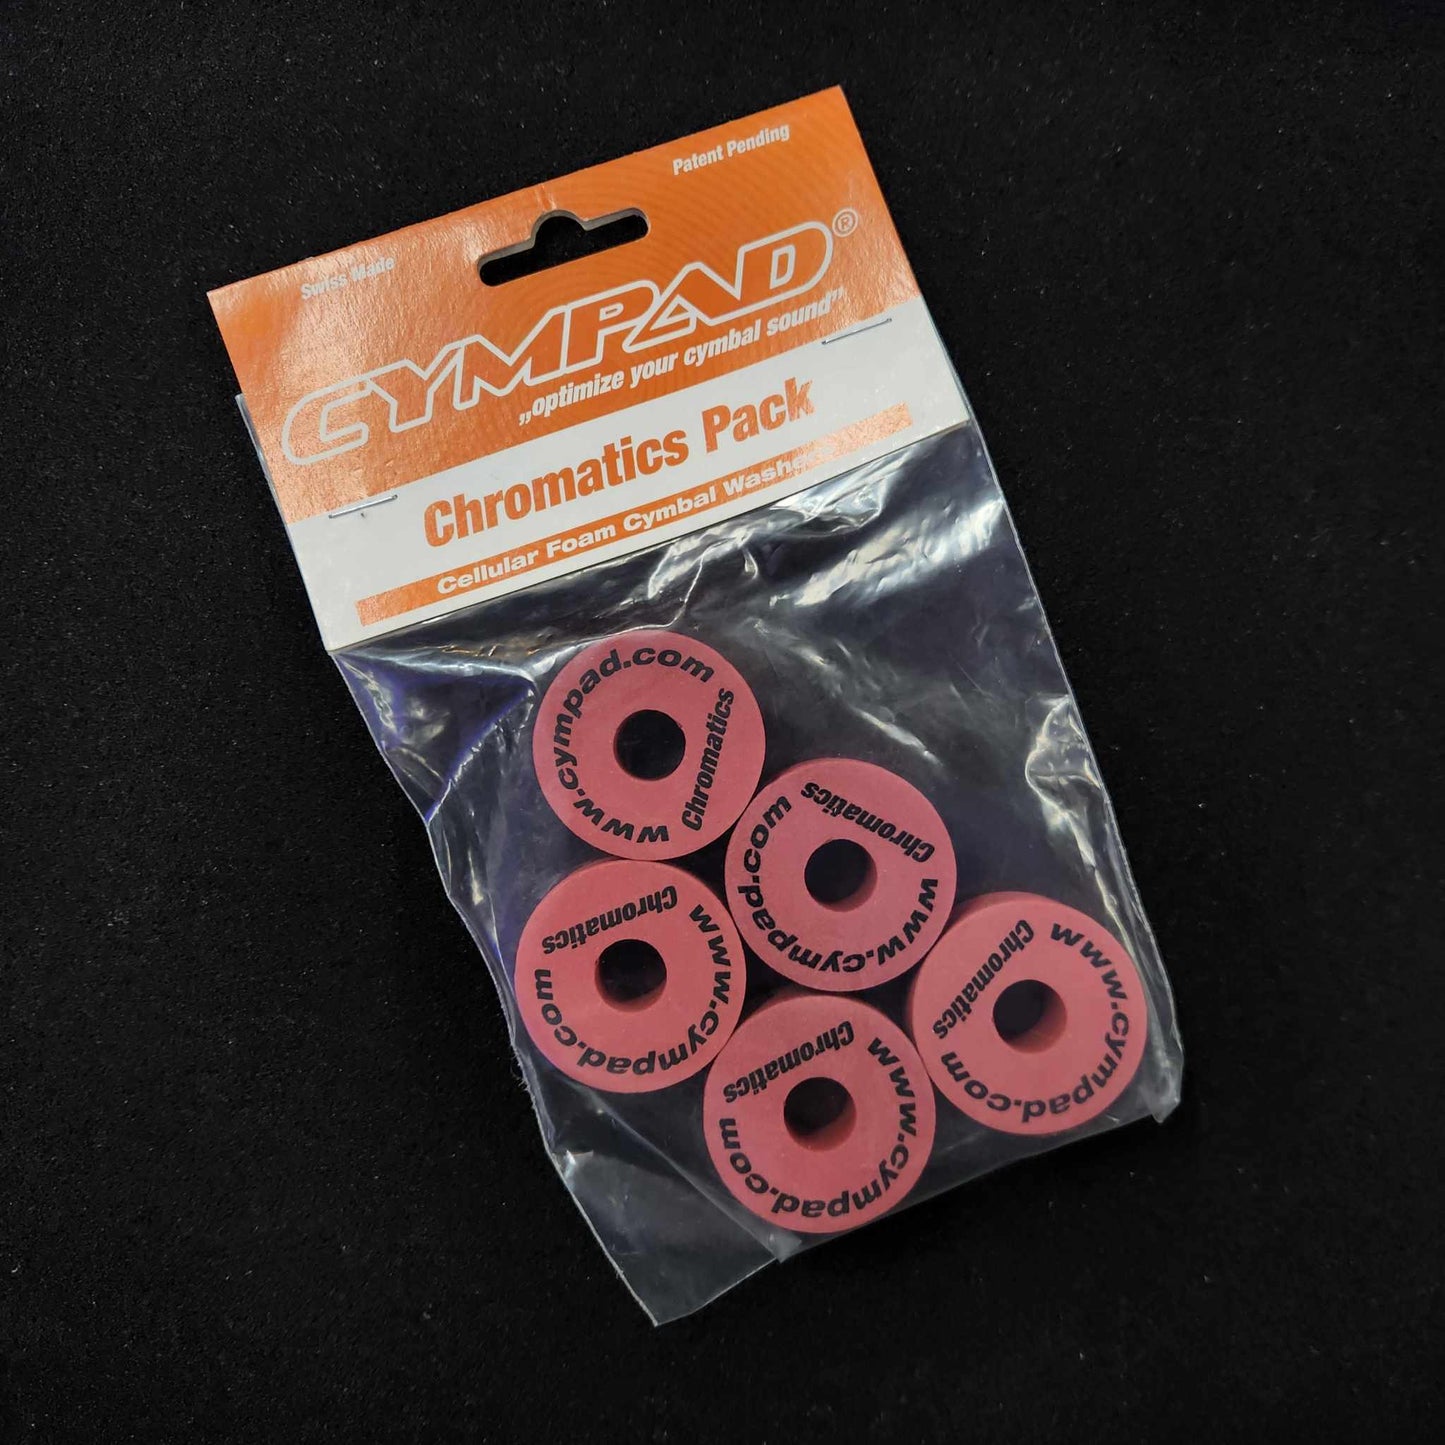 Cympad Chromatics 5 Pack